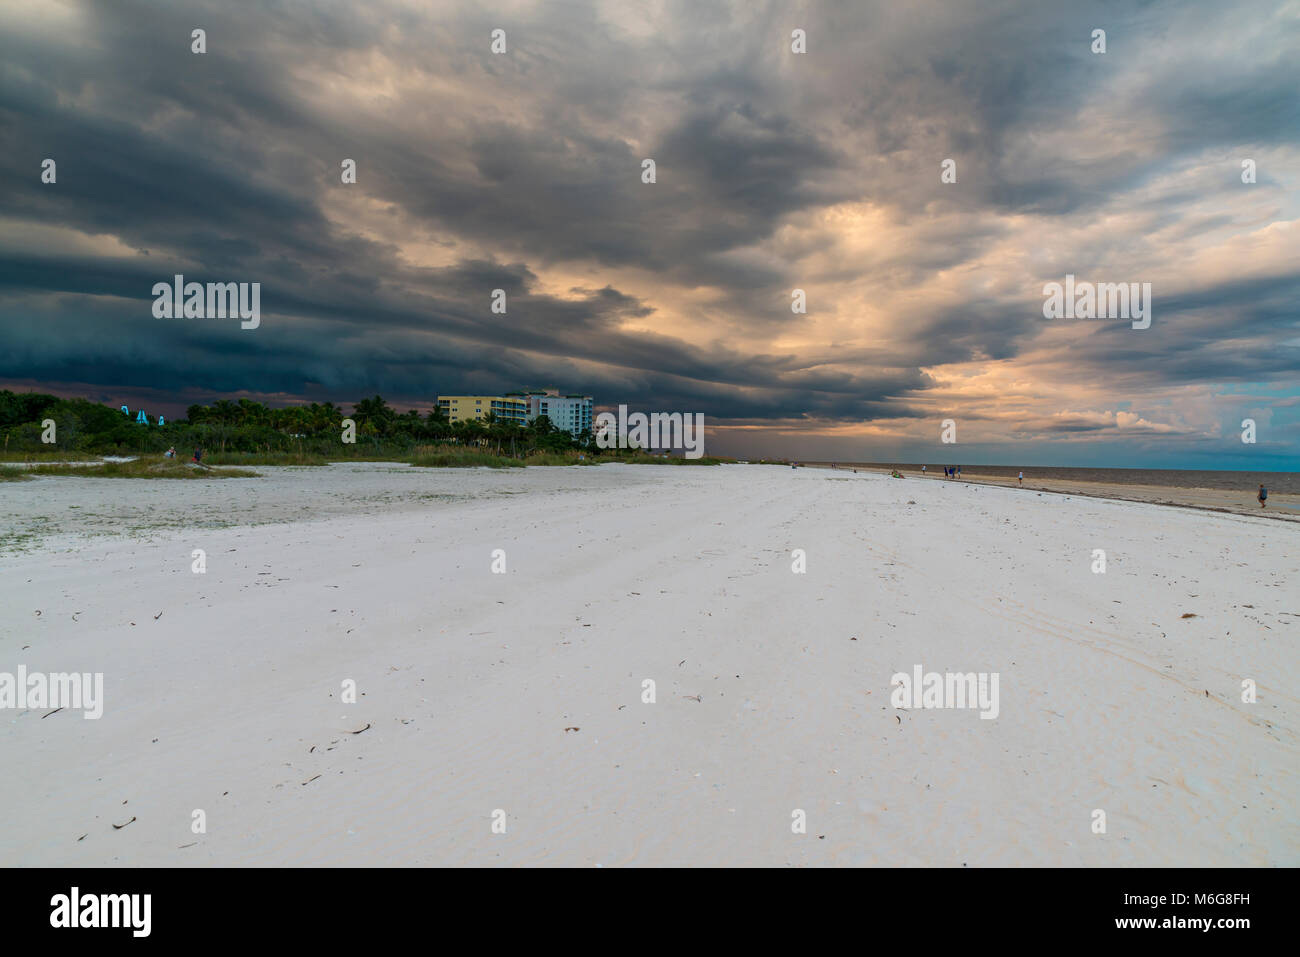 USA, Florida Fort Myers beach, sol, varmt, semester, ledigt, hav, solnedgång, njuta, beundra, människor, oväder, storm, regn, sun, warm, vacation, lea Stock Photo